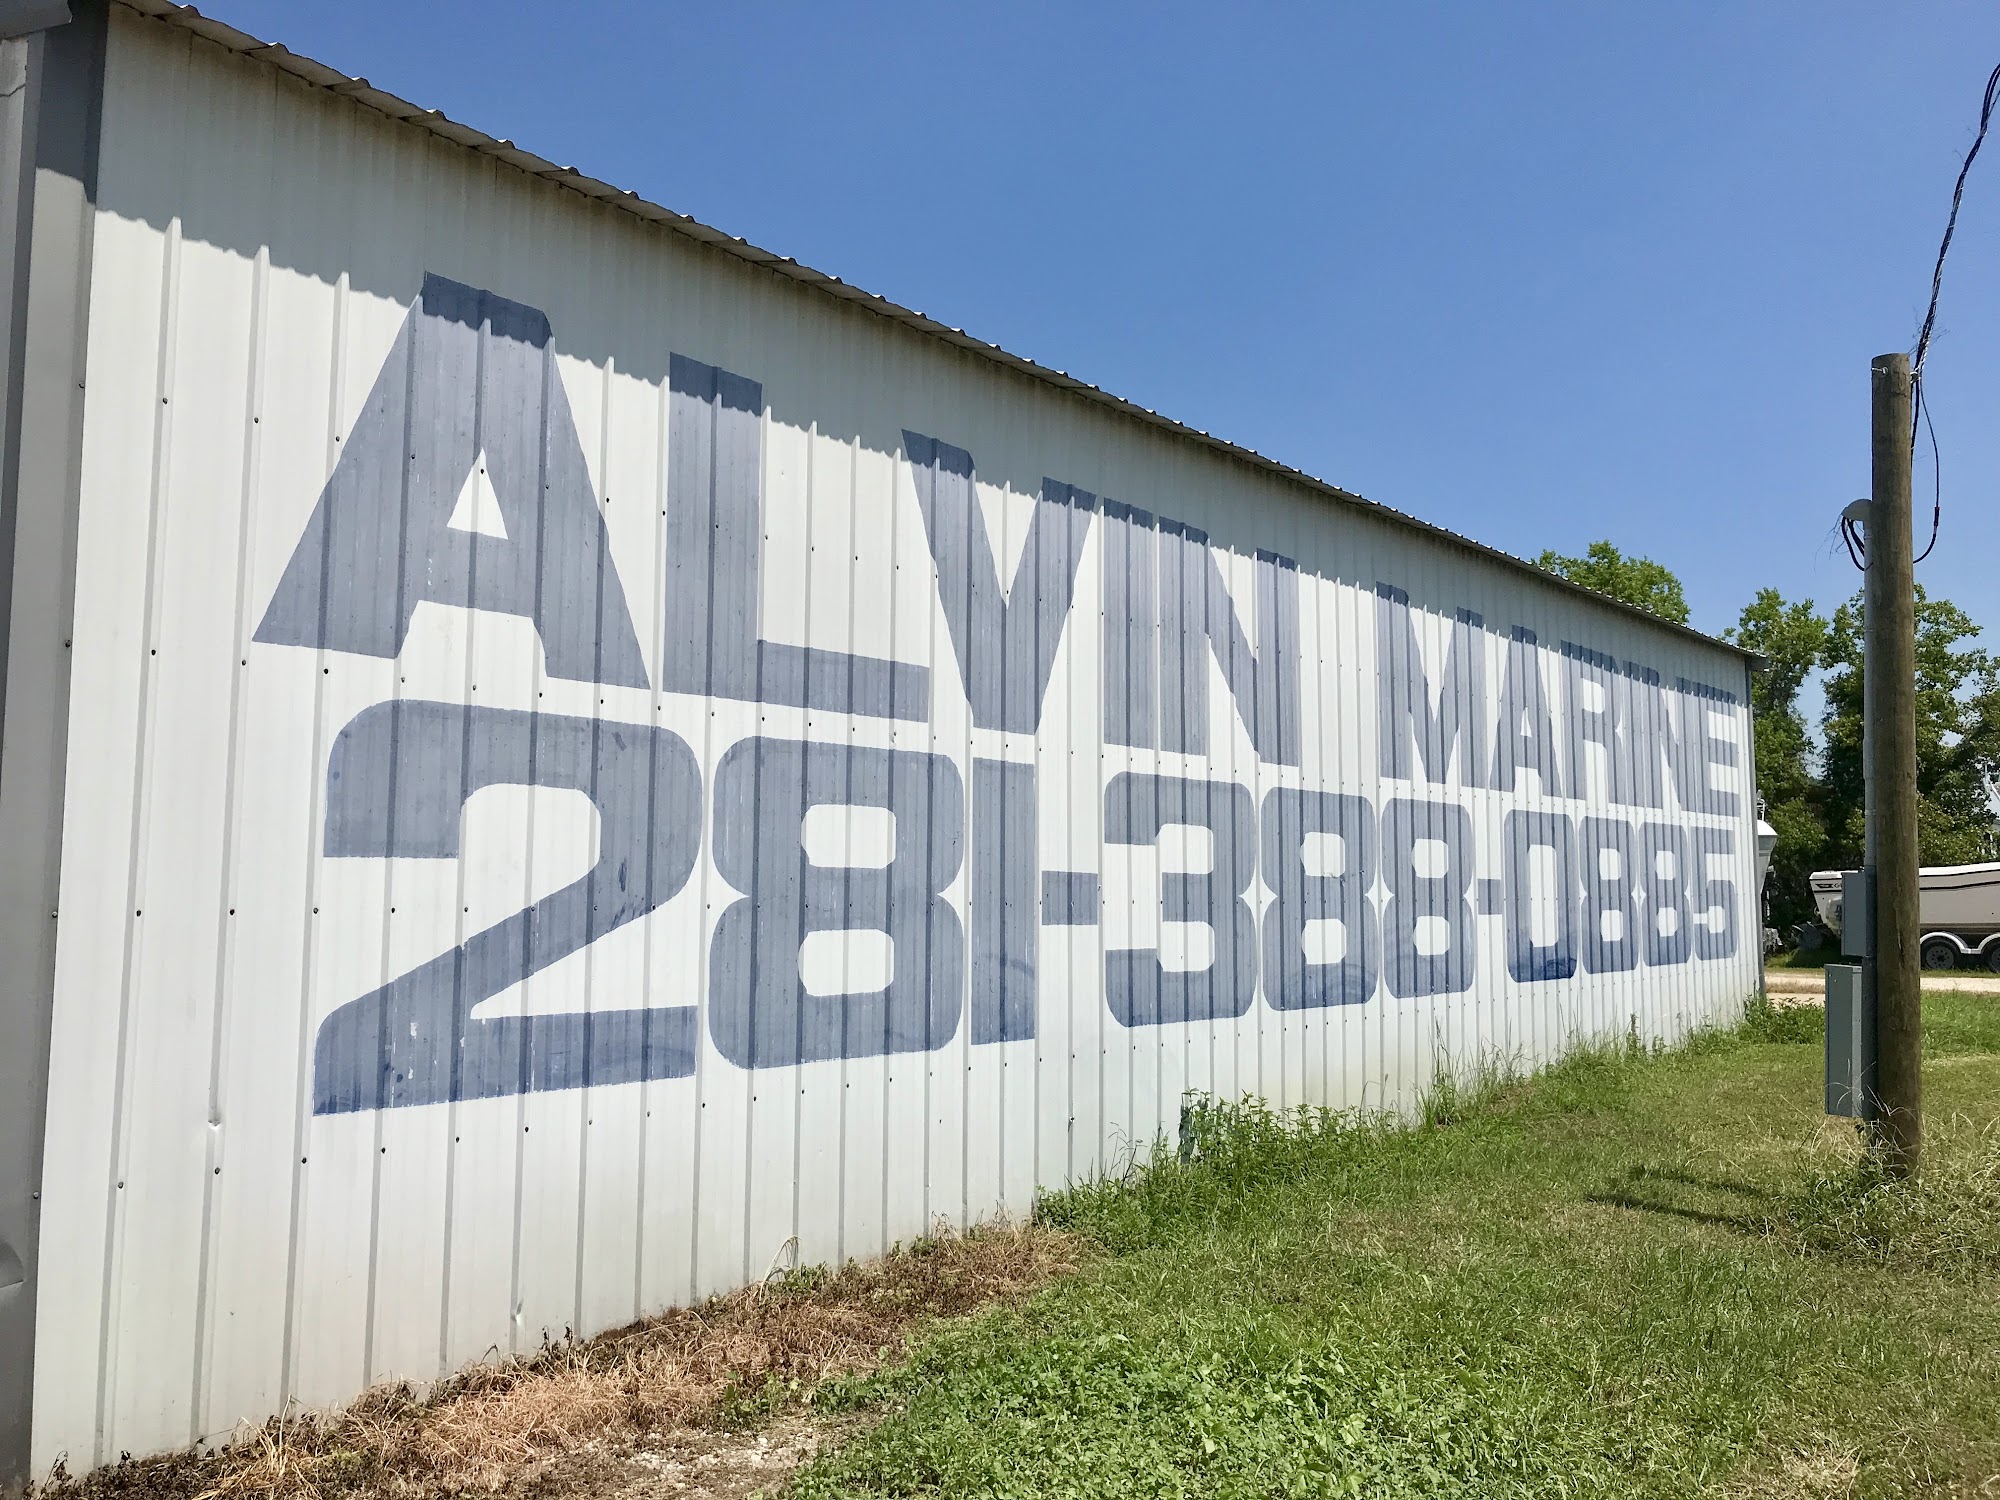 Alvin Marine LLC